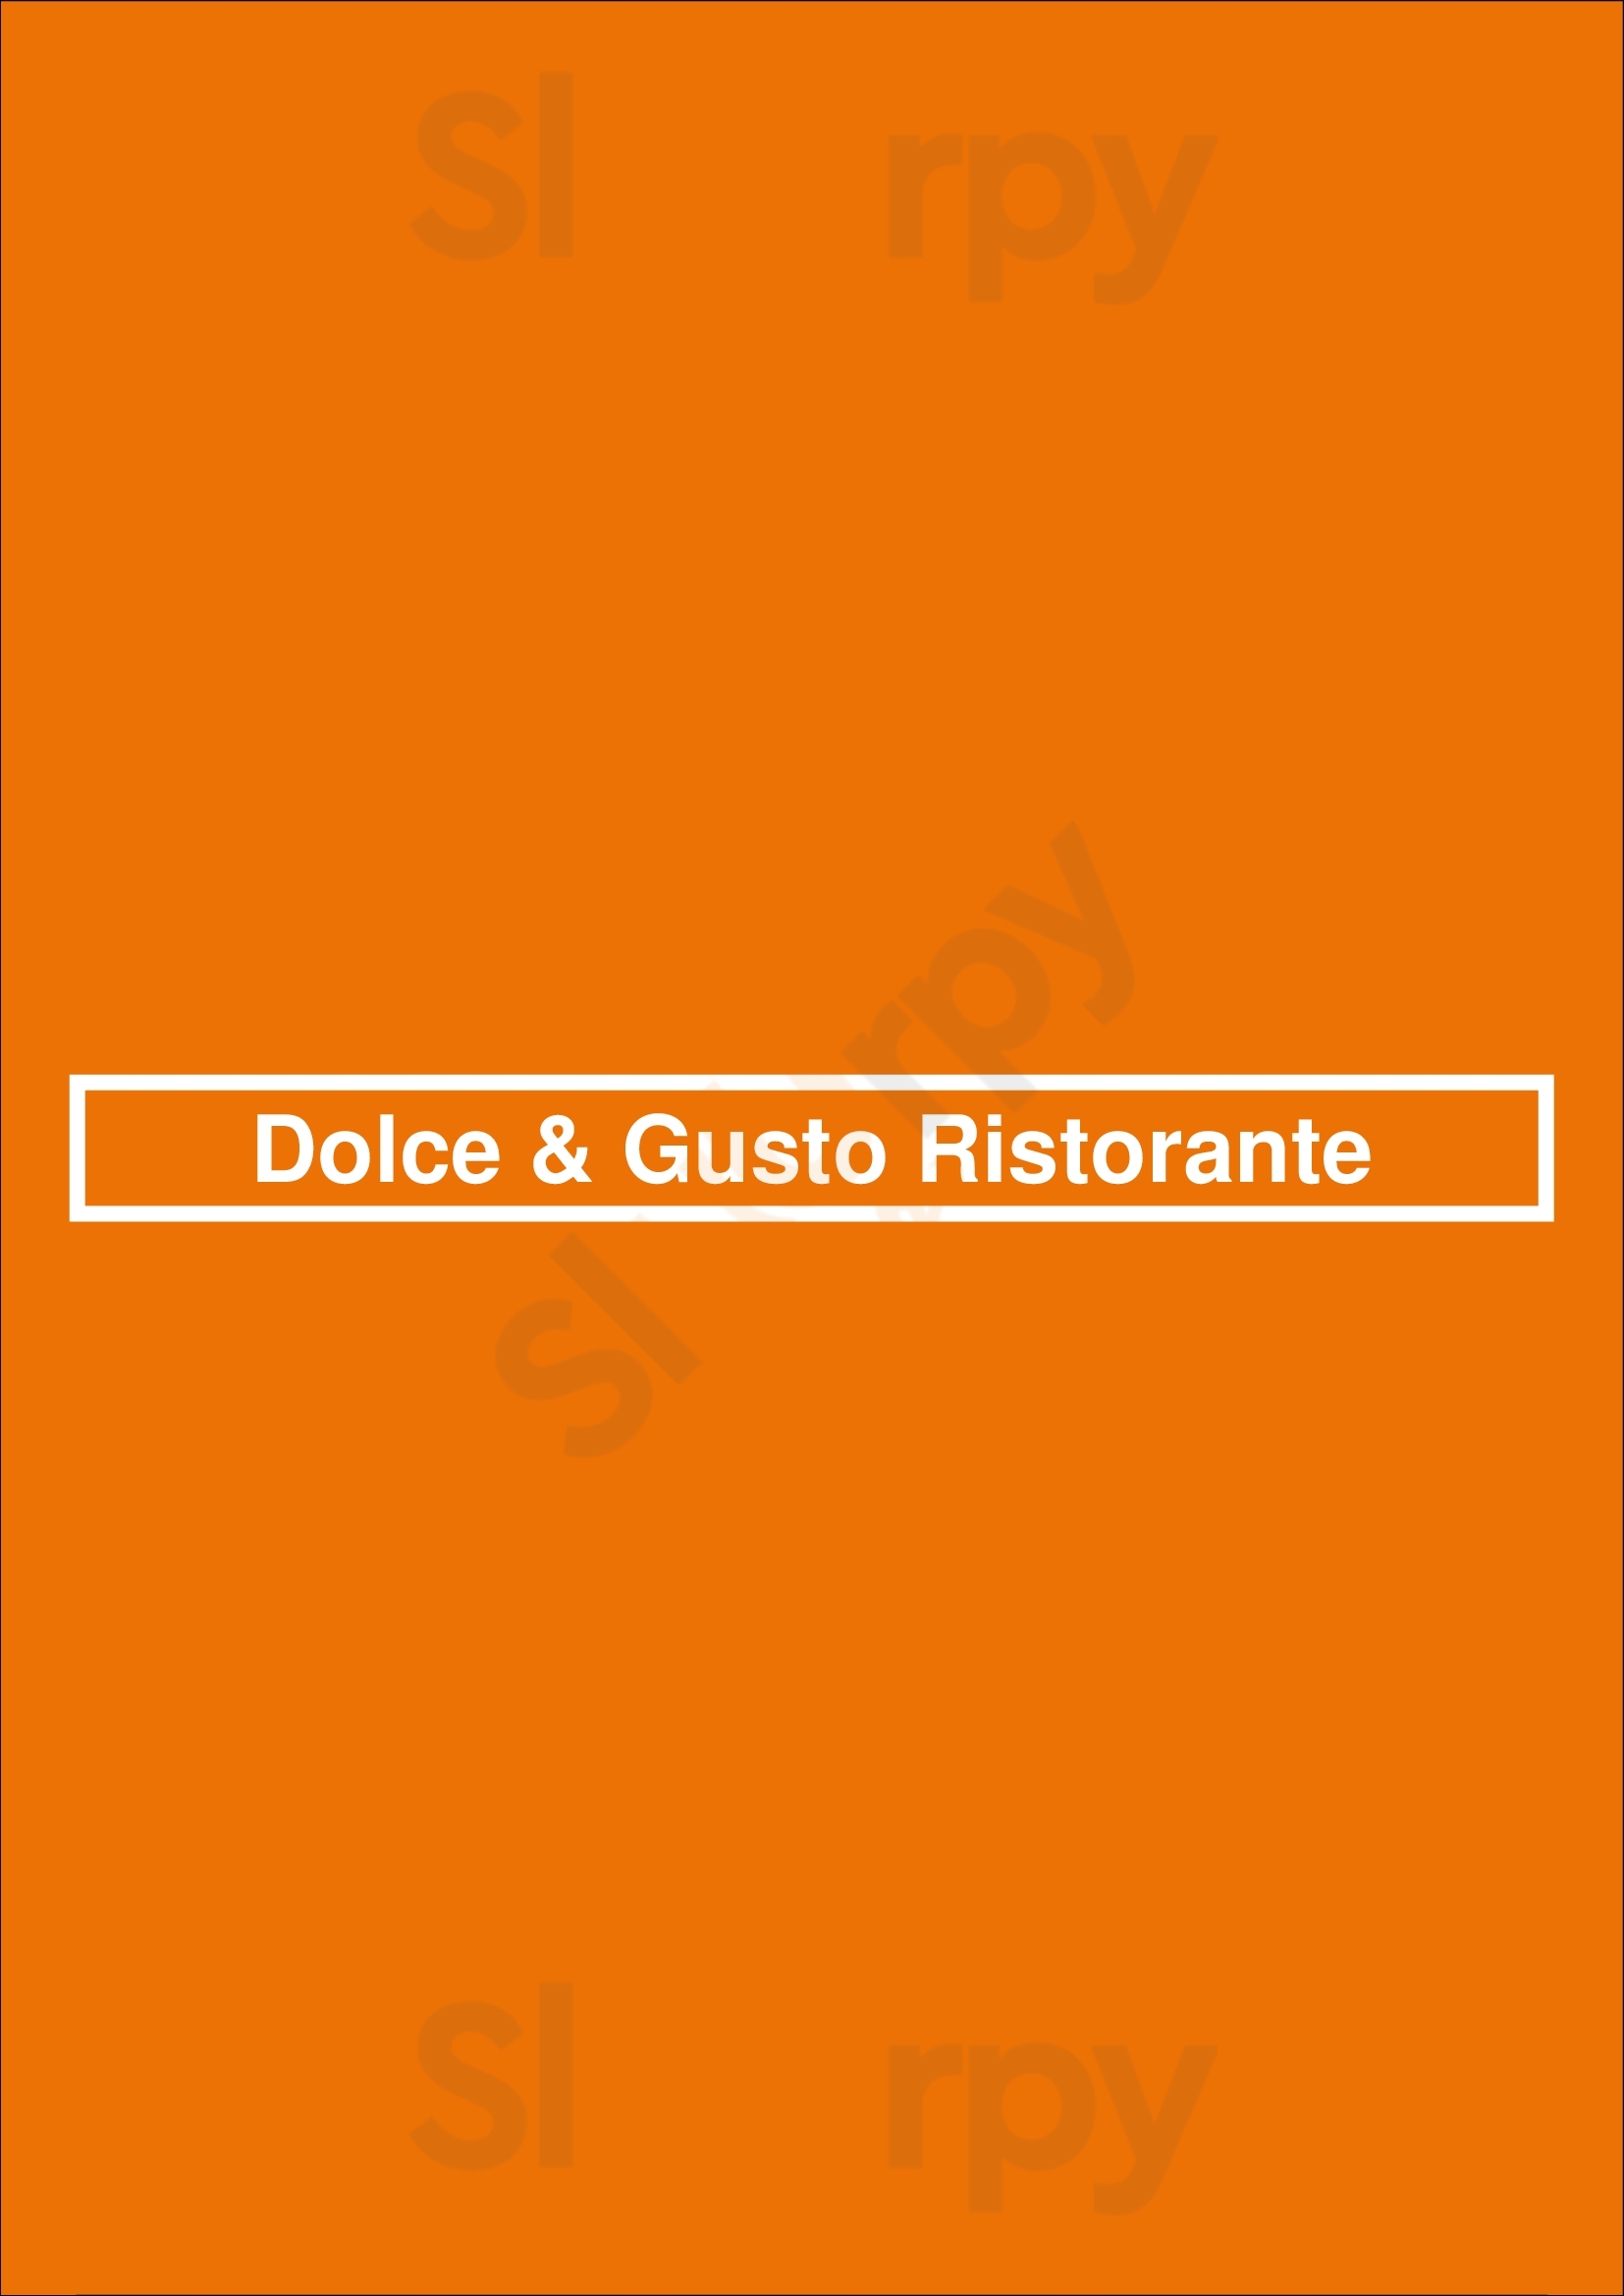 Dolce & Gusto Ristorante Helmond Menu - 1